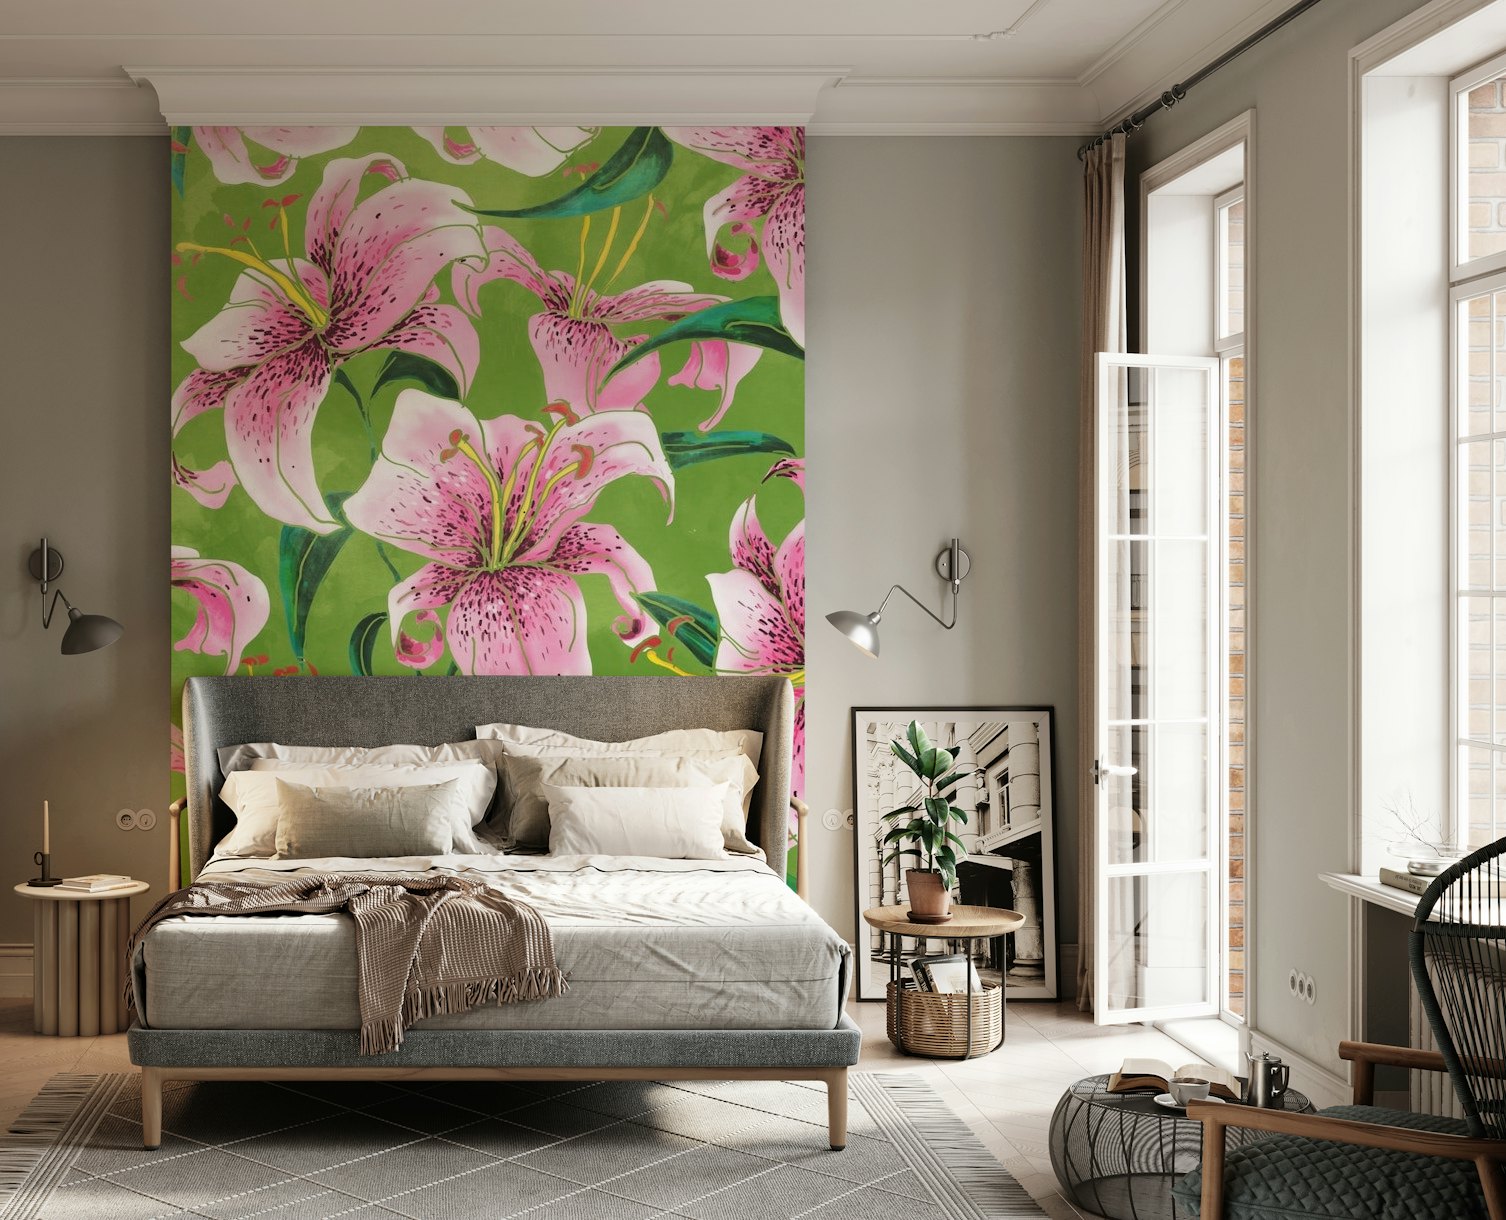 Tiger Lily wallpaper